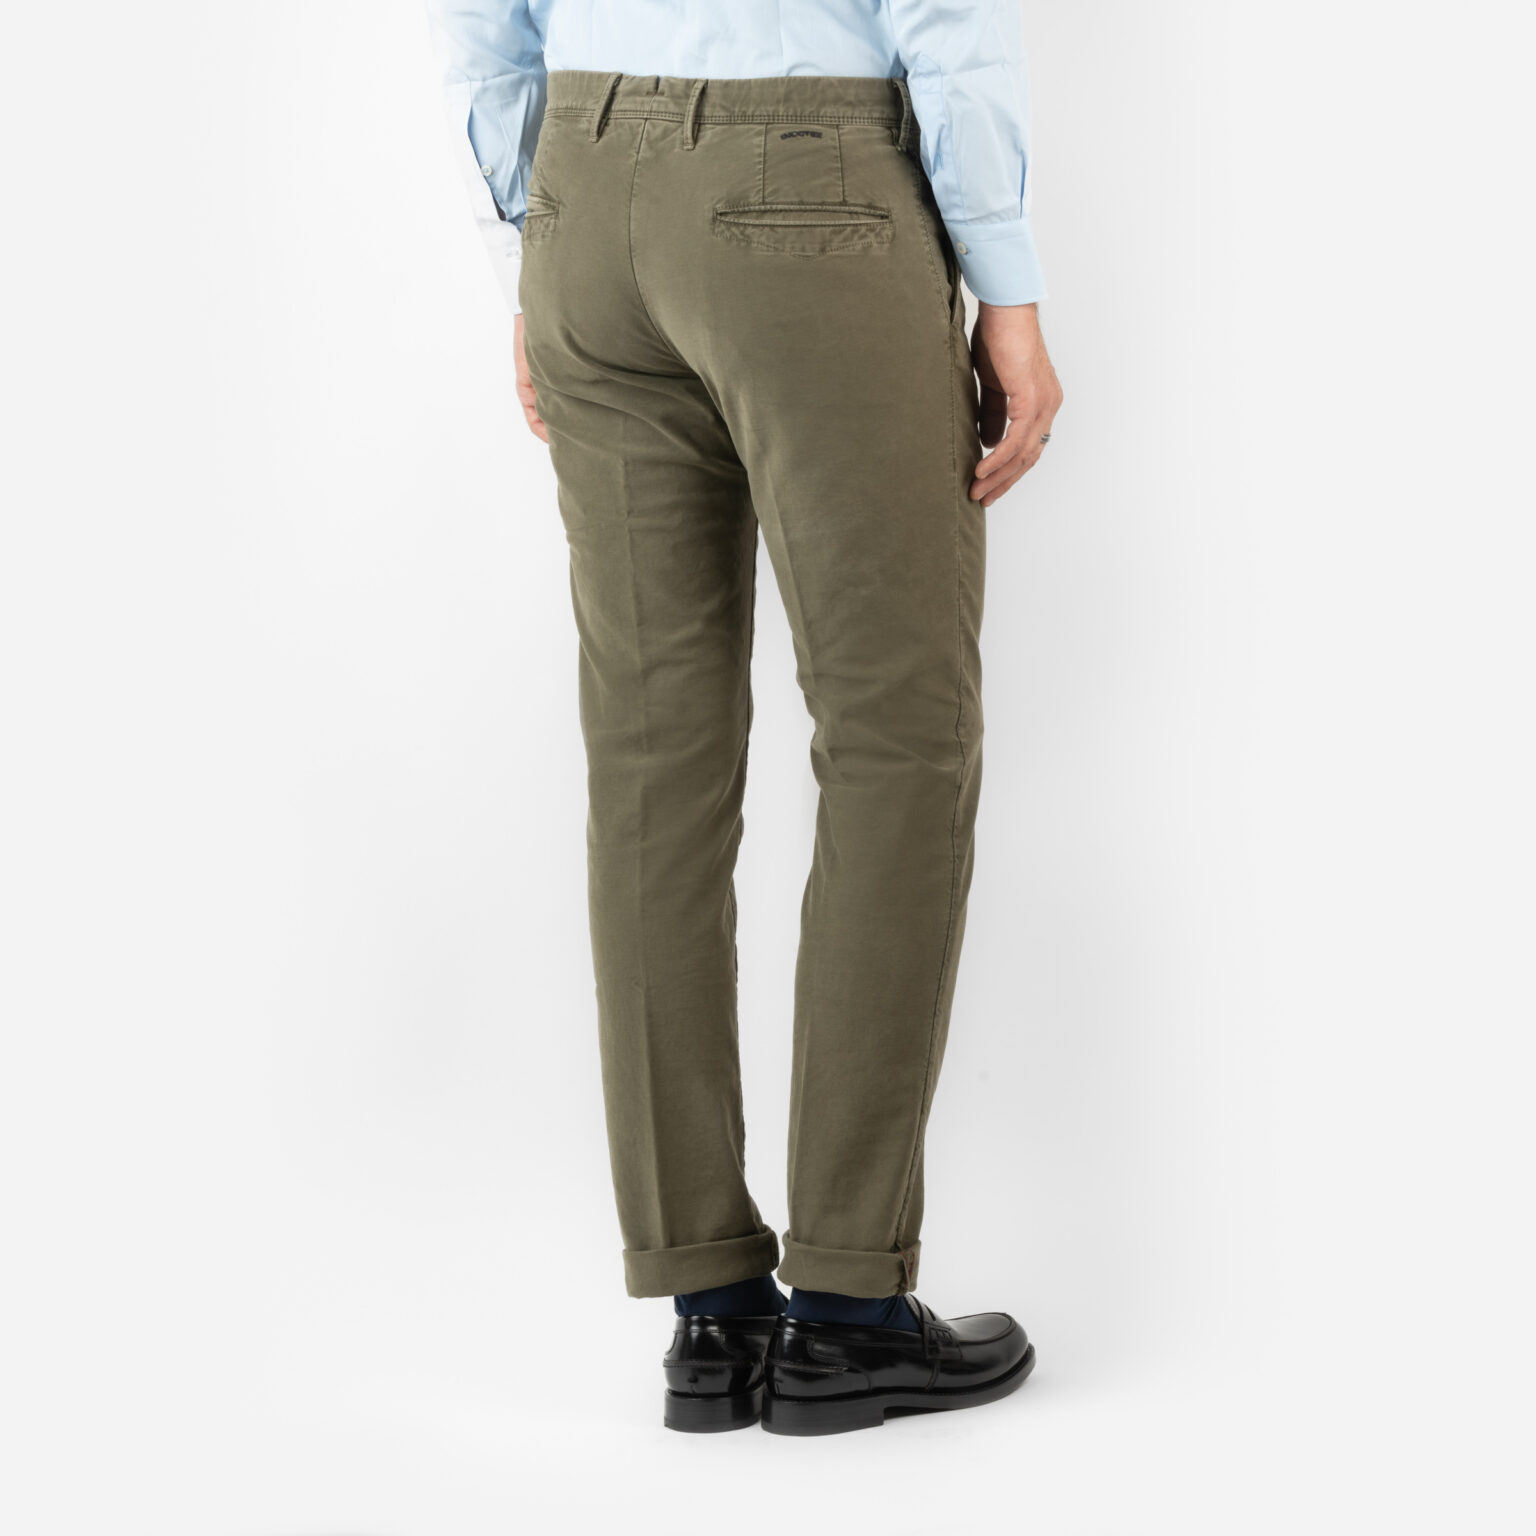 Pantalone Incotex Slack's in cotone, slim fit.